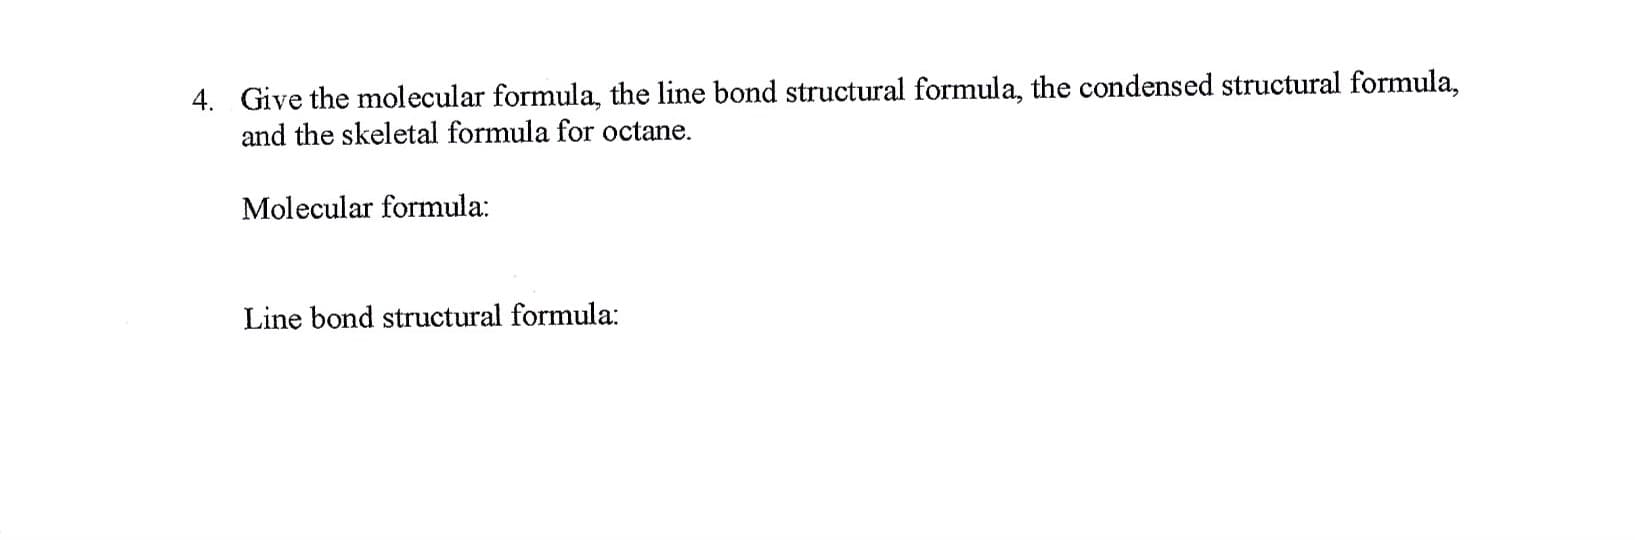 Give the molecular formula, the line bond structural formula, the condensed structural formula,
and the skeletal formula for octane.
4.
Molecular formula:
Line bond structural formula:
